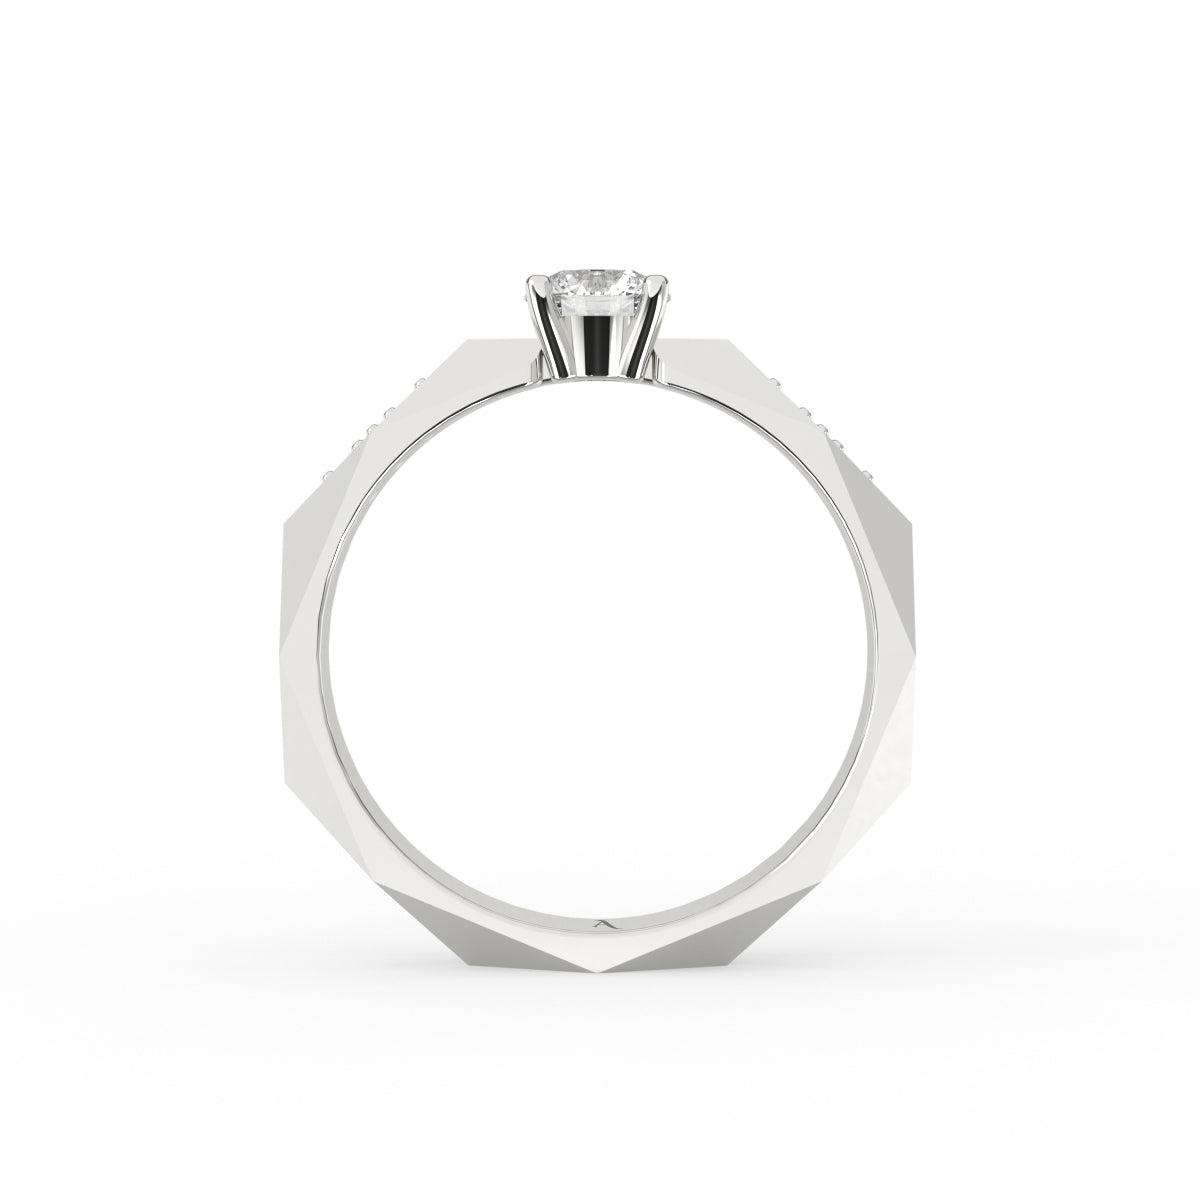 Shimmering space diamond ring